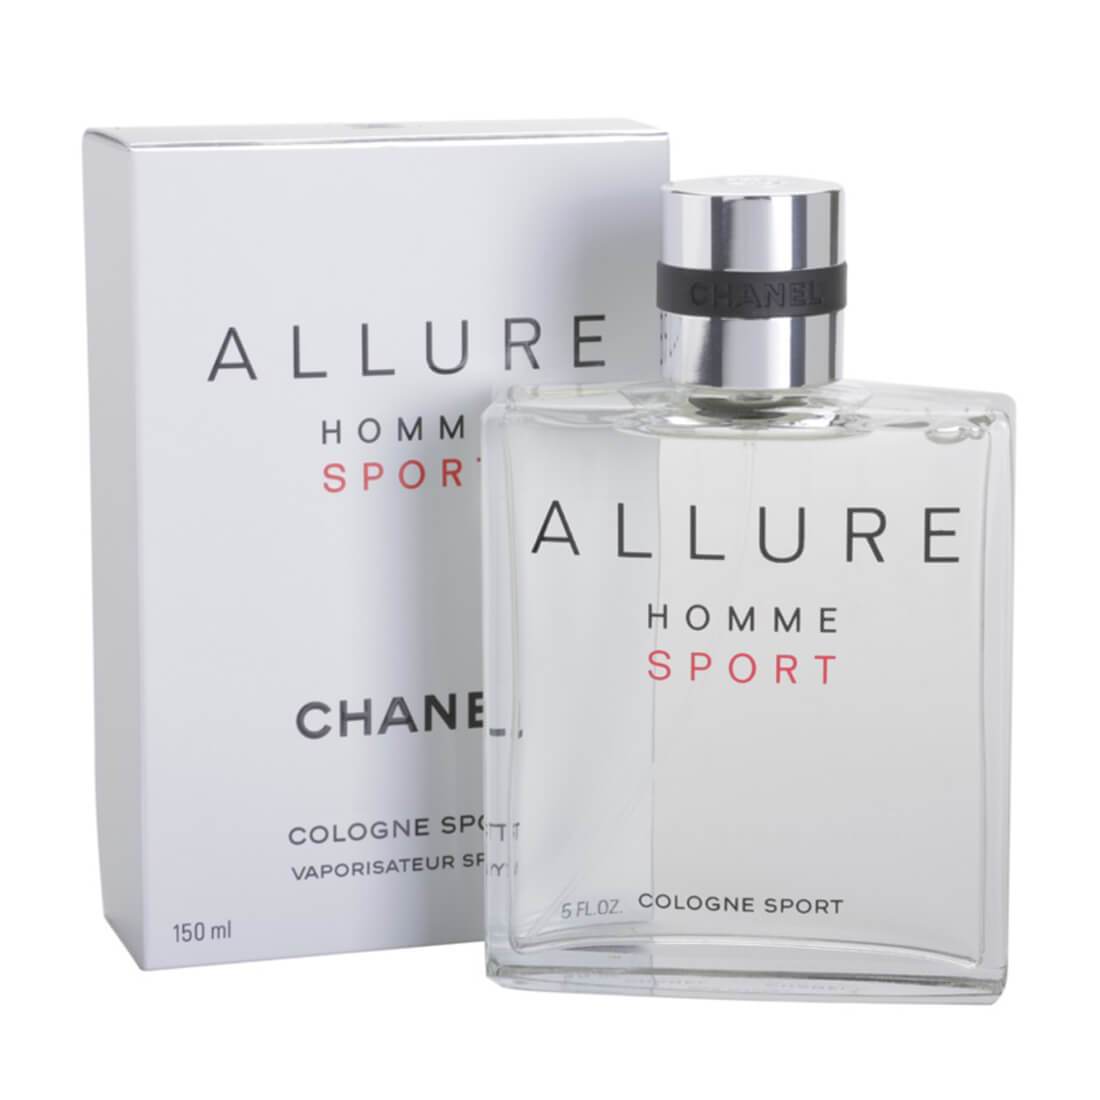 CHANEL Allure Homme Sport Eau de Toilette Spray, 50ml at John